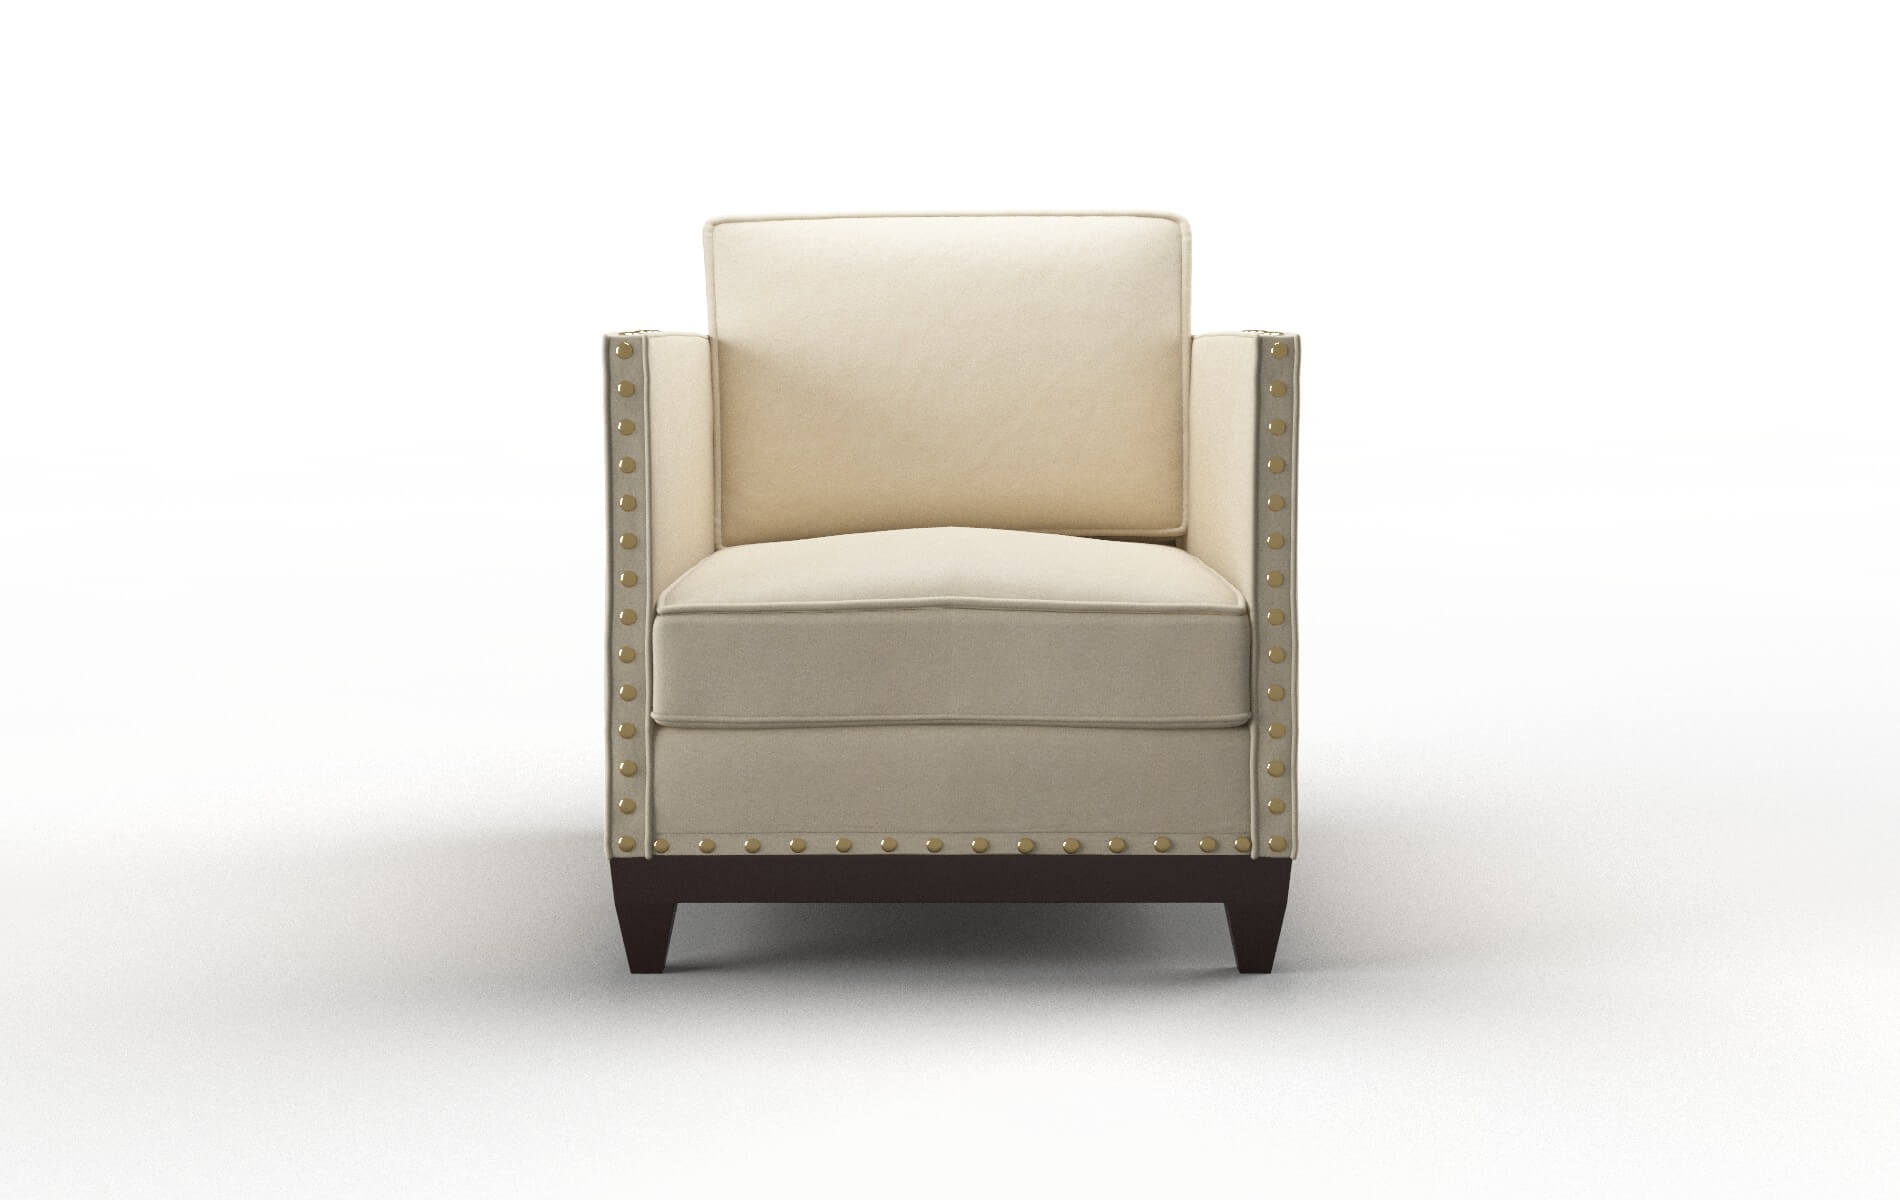 Florence Dream_d Almond Chair espresso legs 1